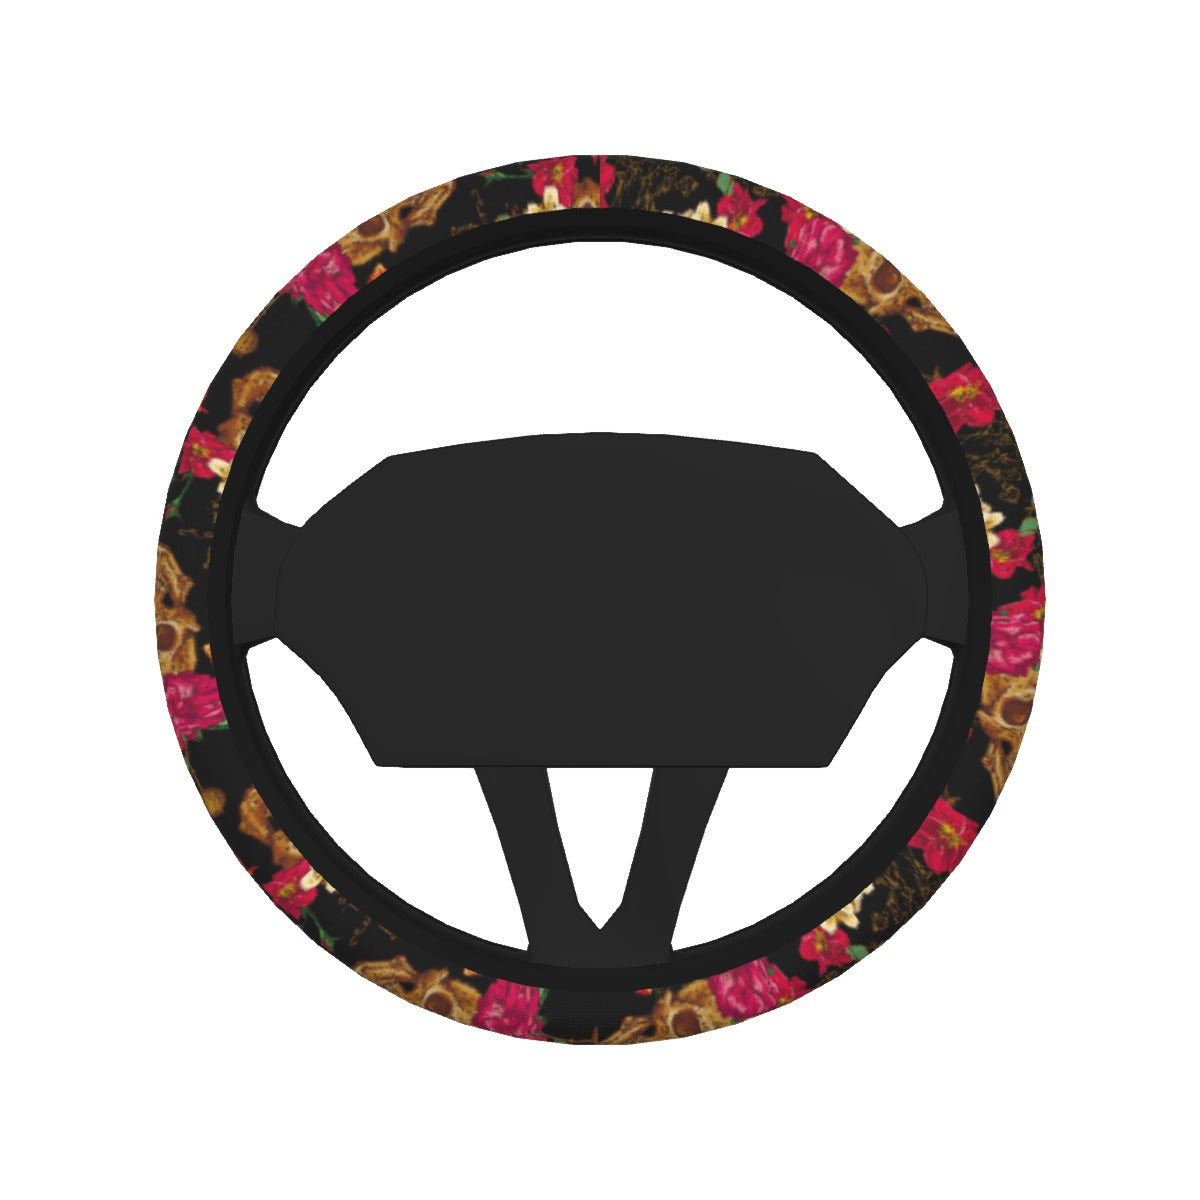 Floral skull Steering Wheel Cover